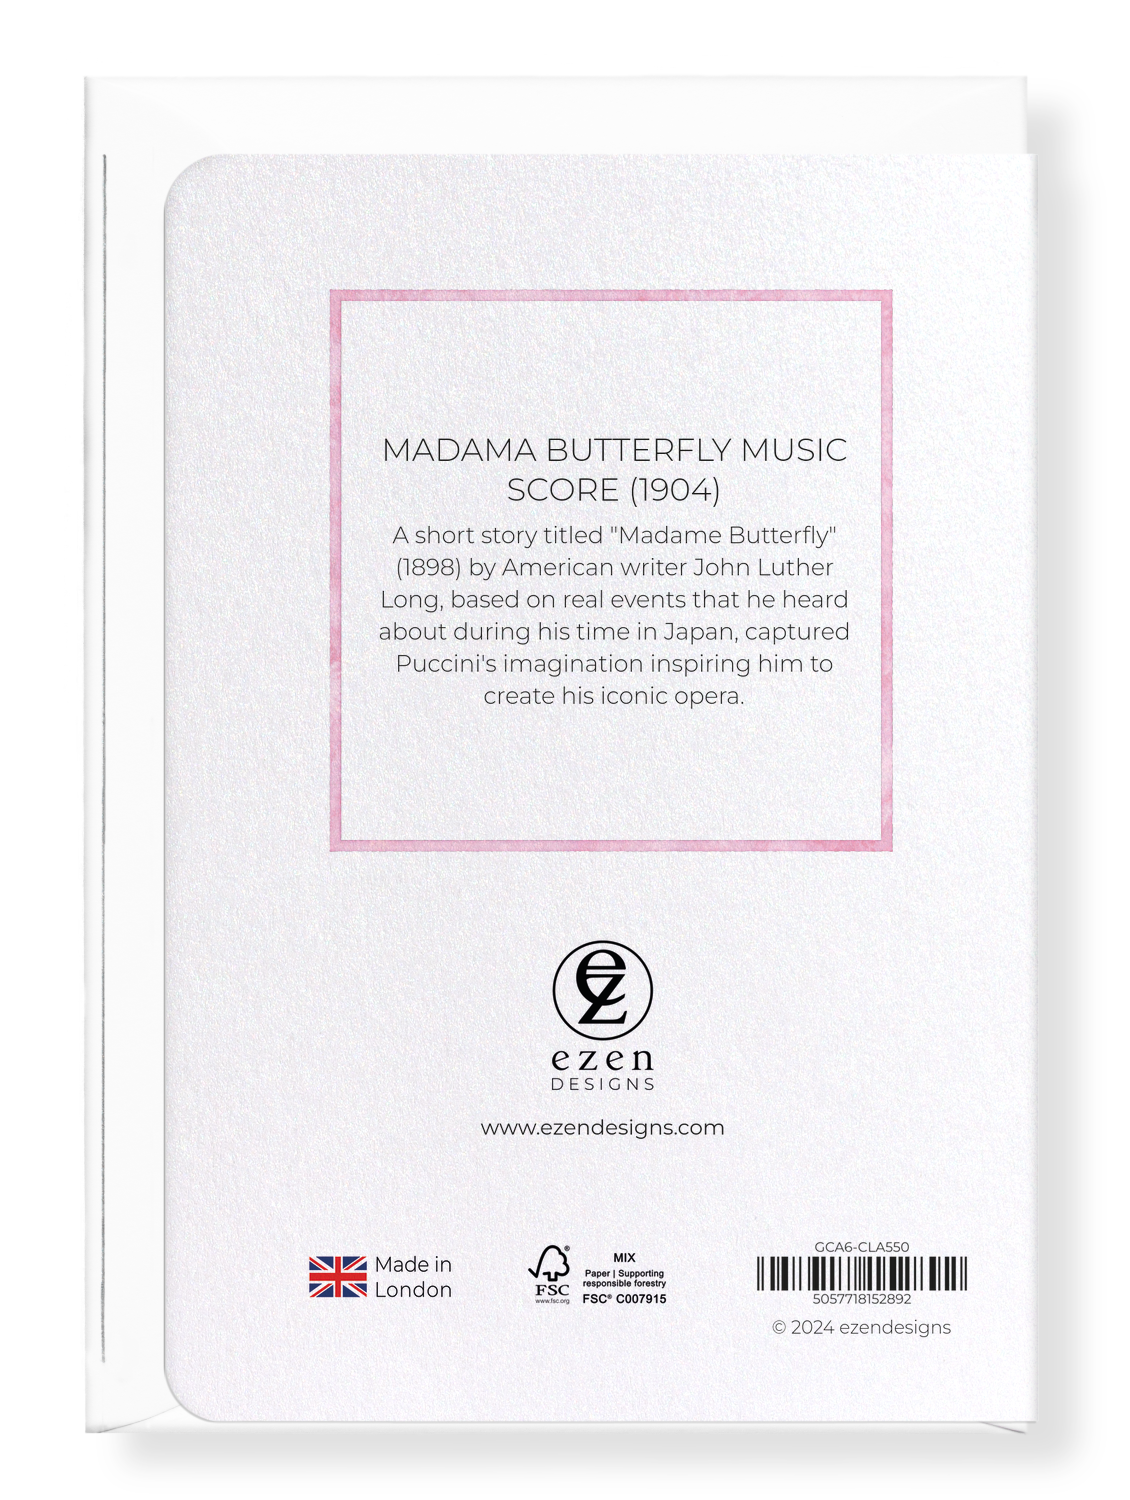 Ezen Designs - Madama Butterfly Music Score (1904) - Greeting Card - Back